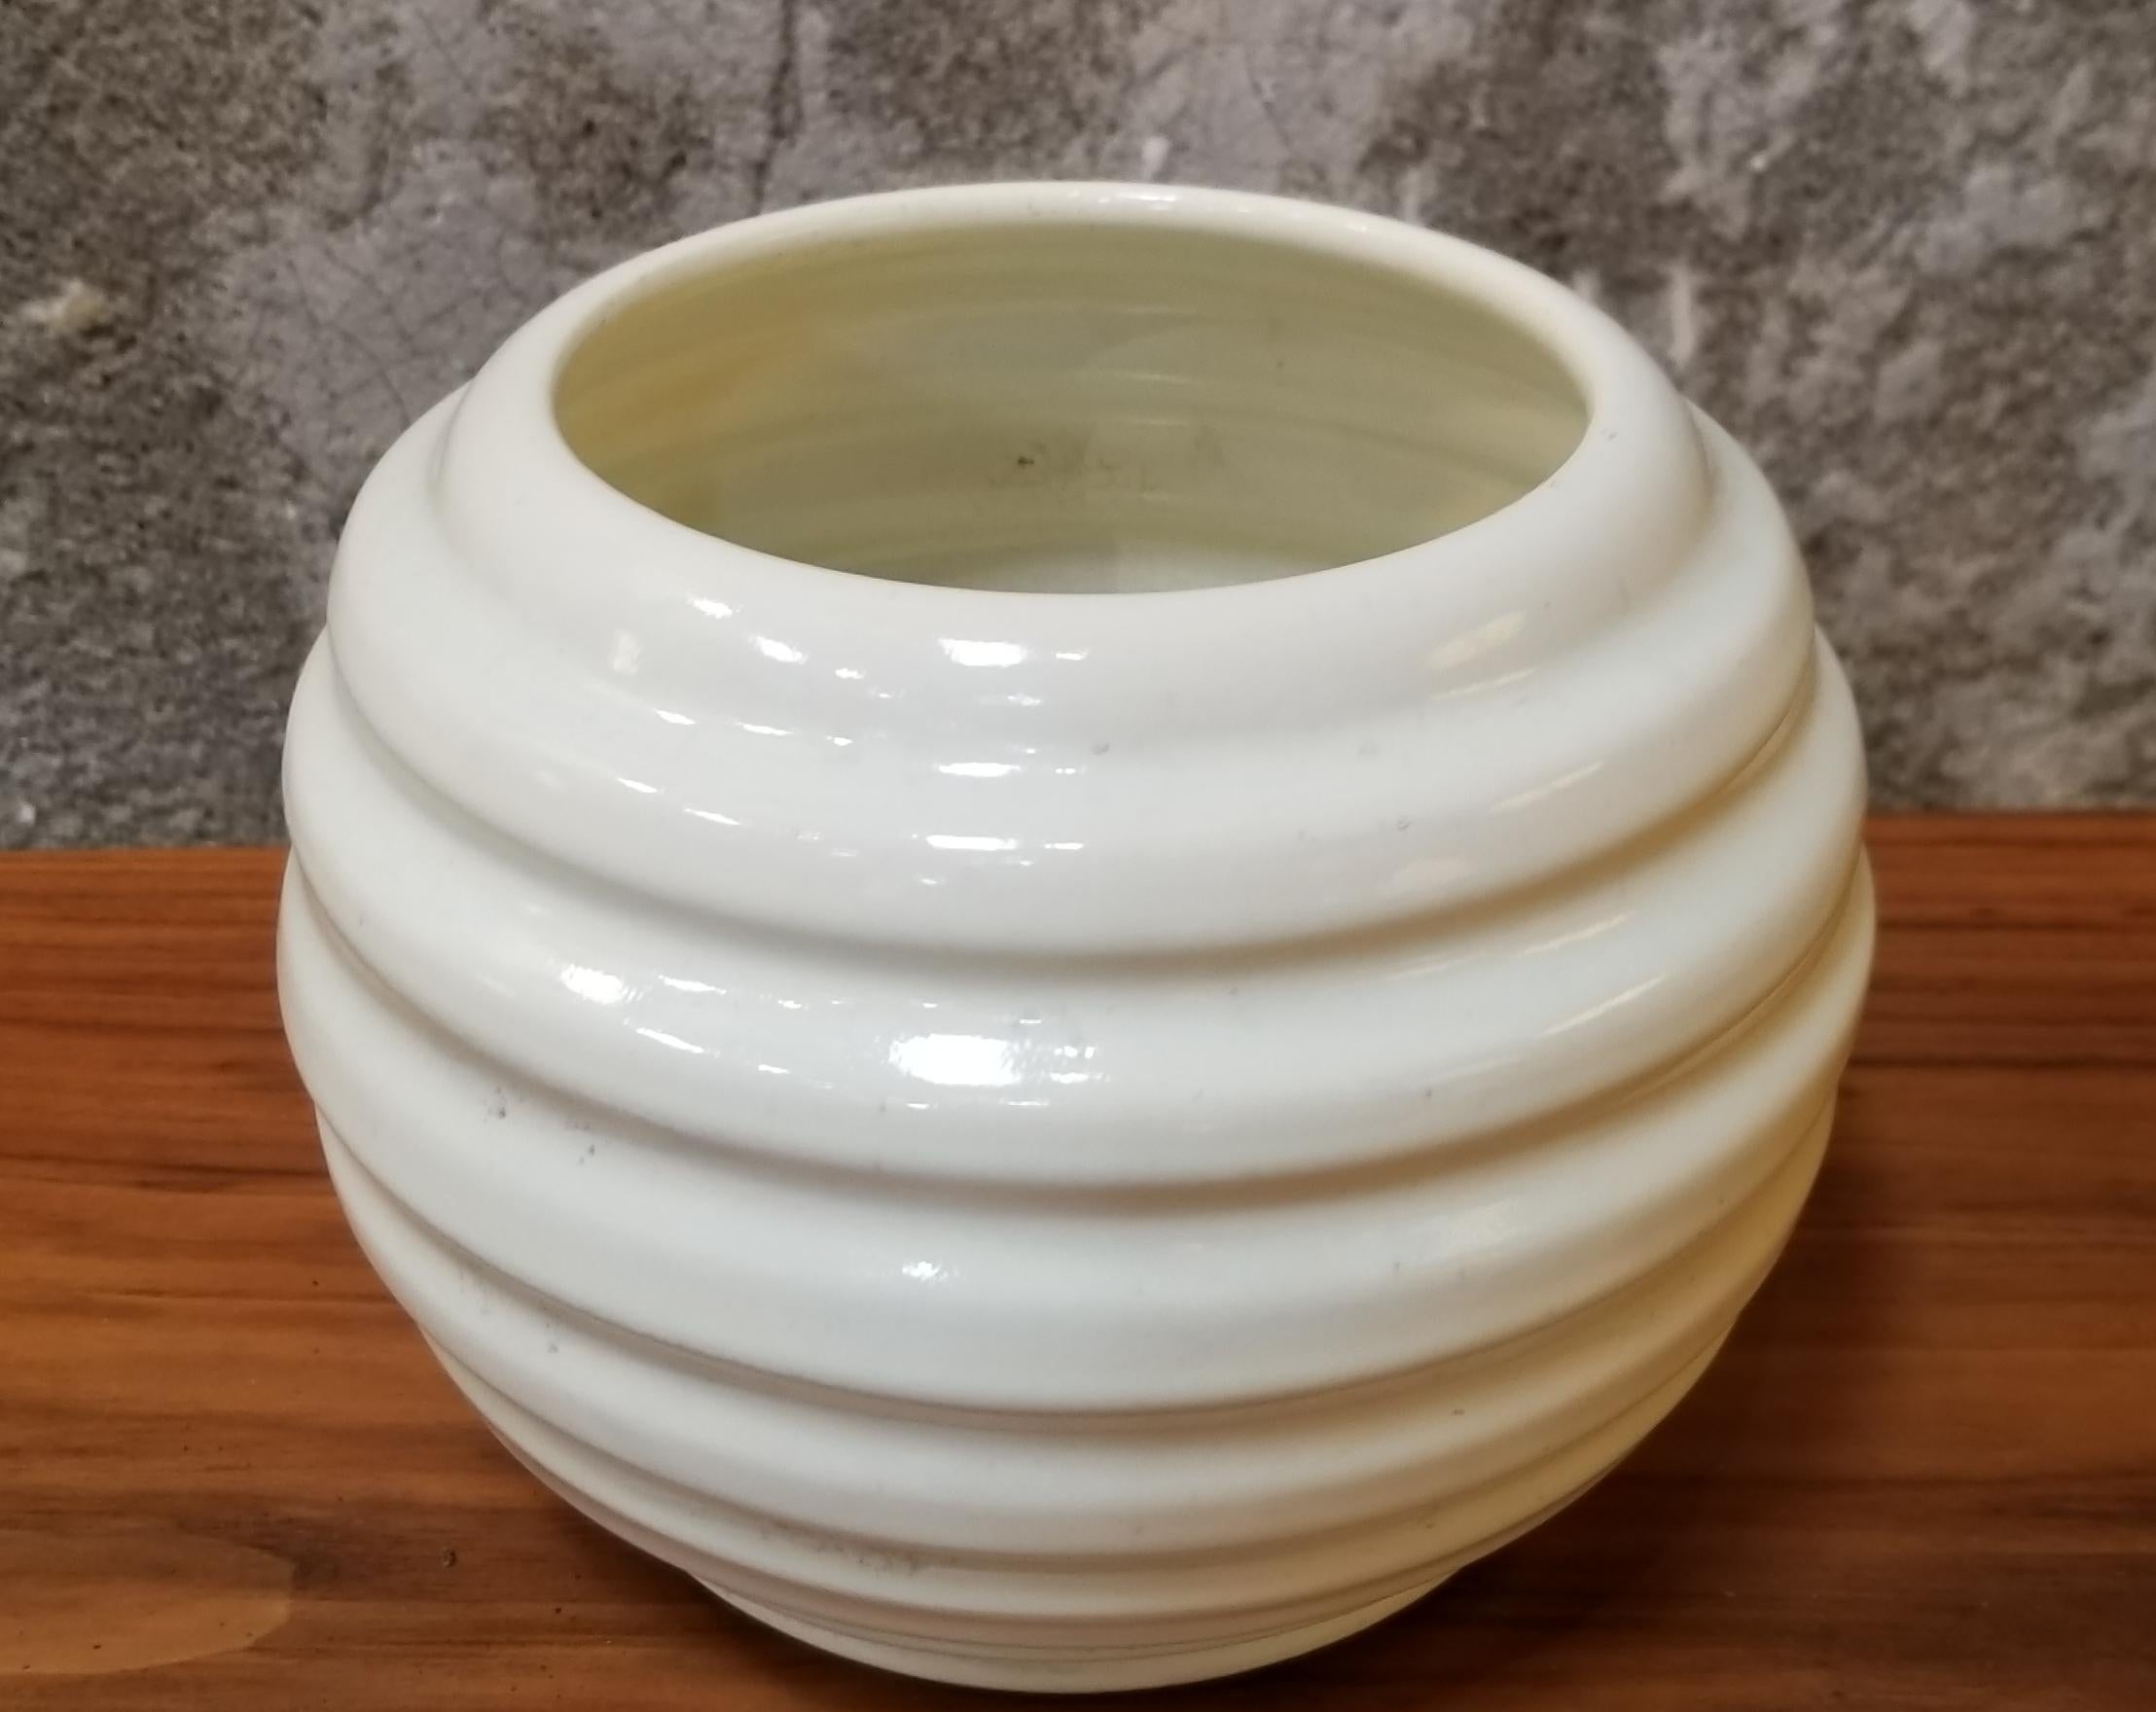 Handcrafted white decorative artware pot by Garden City Pottery, San Jose, California. Circa. 1930's. Ribbed Industrial Design, Excellent original vintage condition.

Garden City Pottery was founded in 1902 in San Jose, California with an office